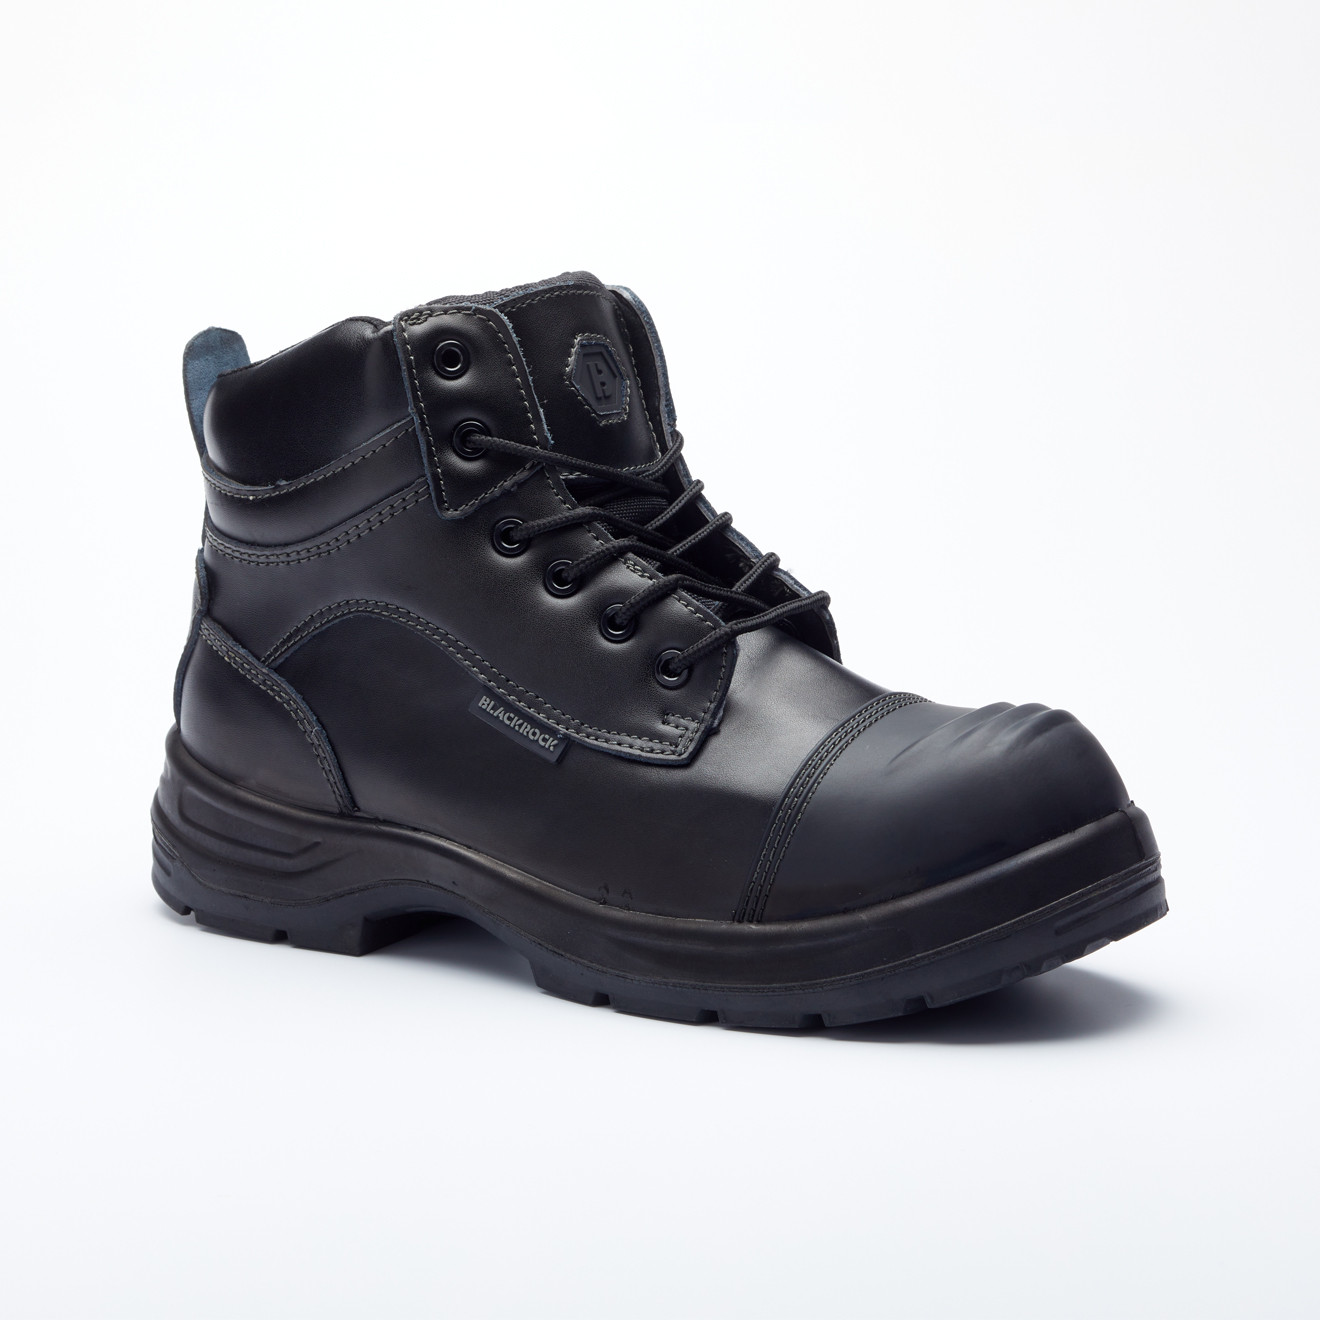 Lincoln Metatarsal Waterproof Work Boots